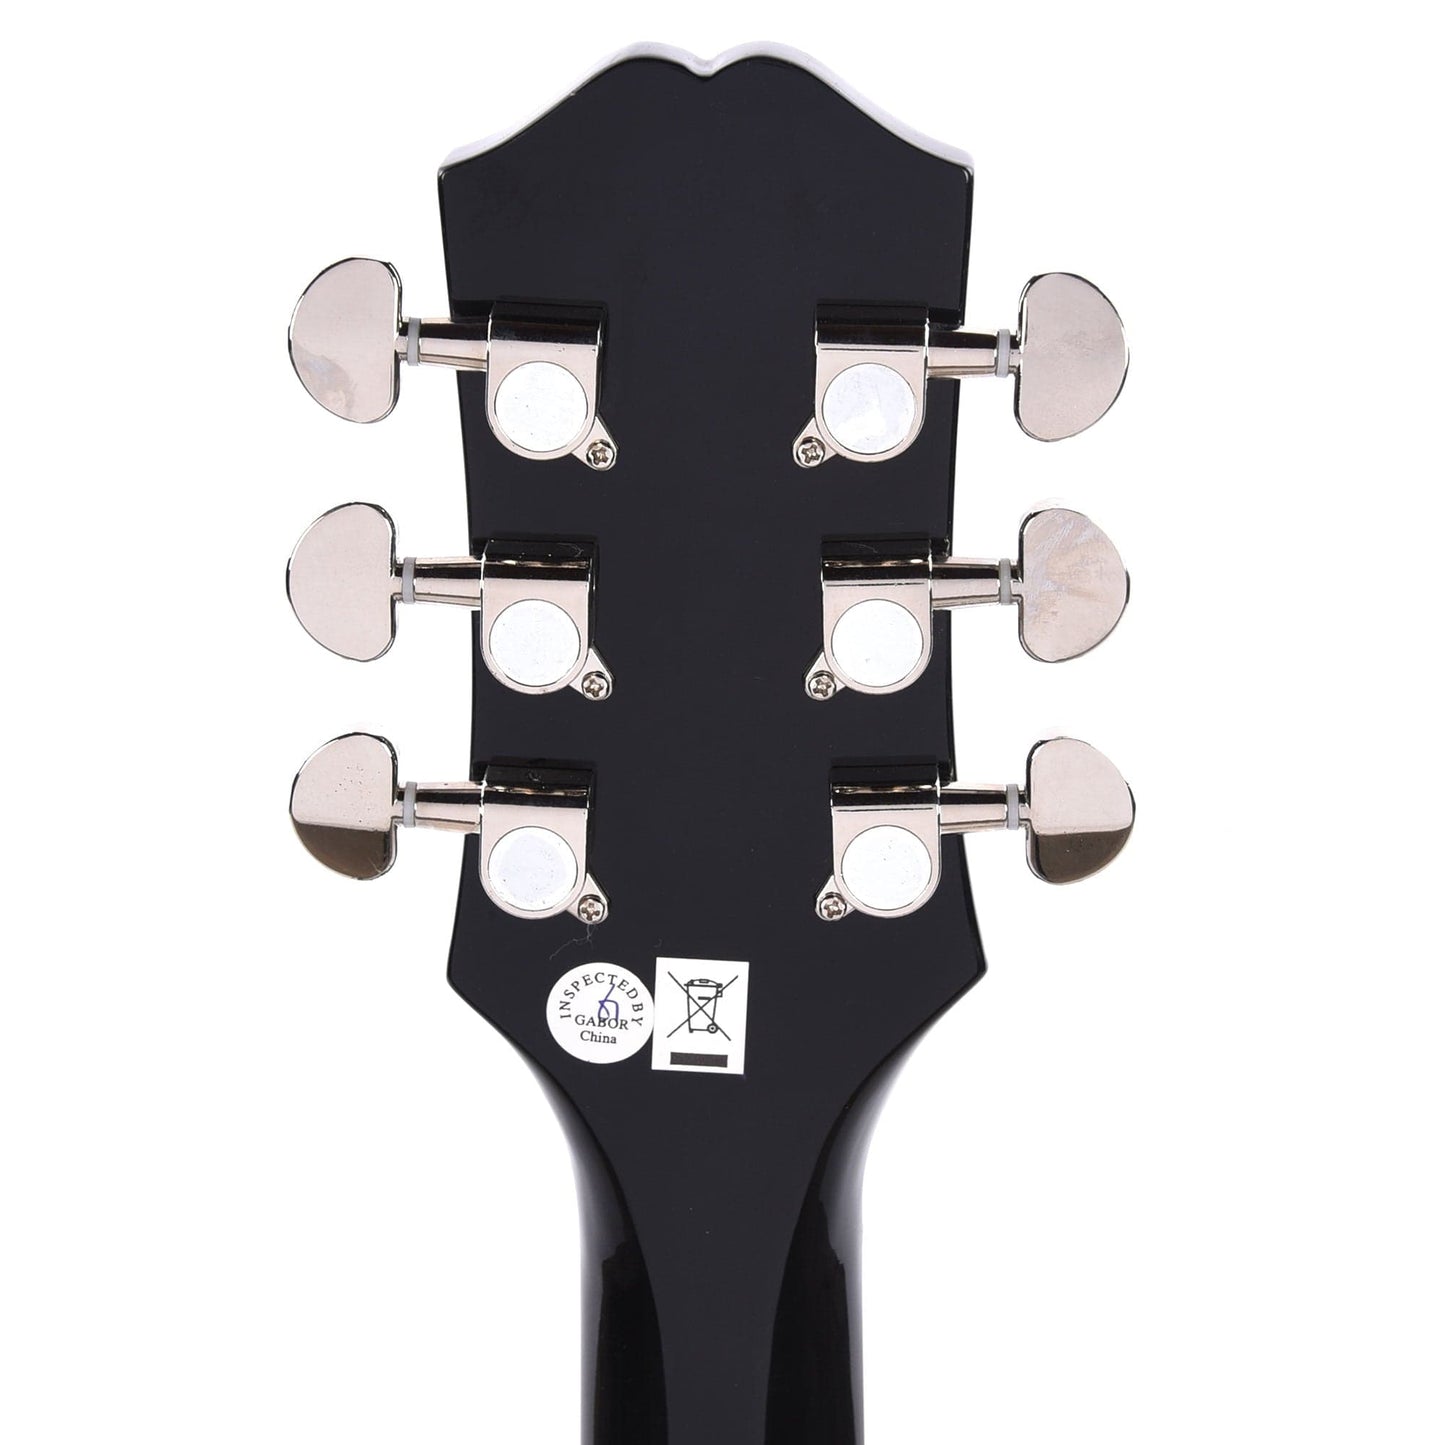 Epiphone Power Players Les Paul Dark Matter Ebony Electric Guitars / Solid Body